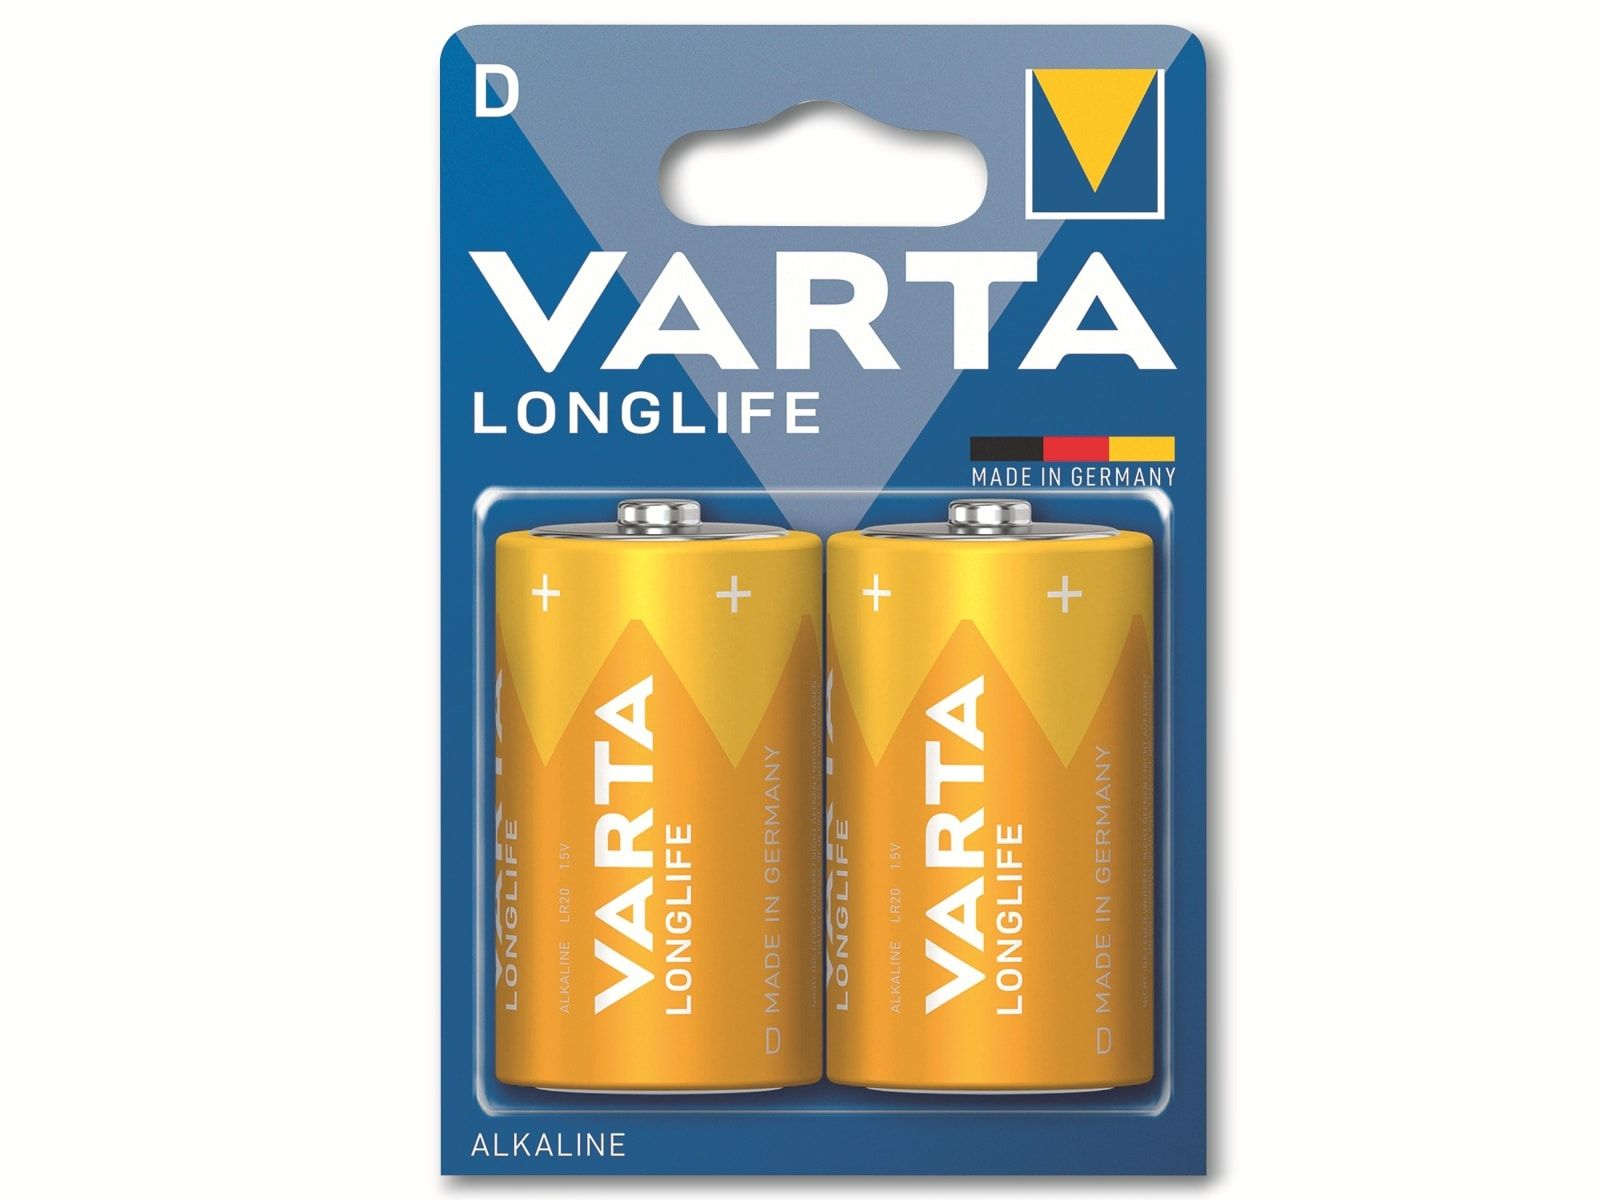 VARTA Longlife Mono Mando Batterie Ah 1.5 LR20 15.8 4120 (2er Volt, Batterie, D Distancia Blister) AlMn